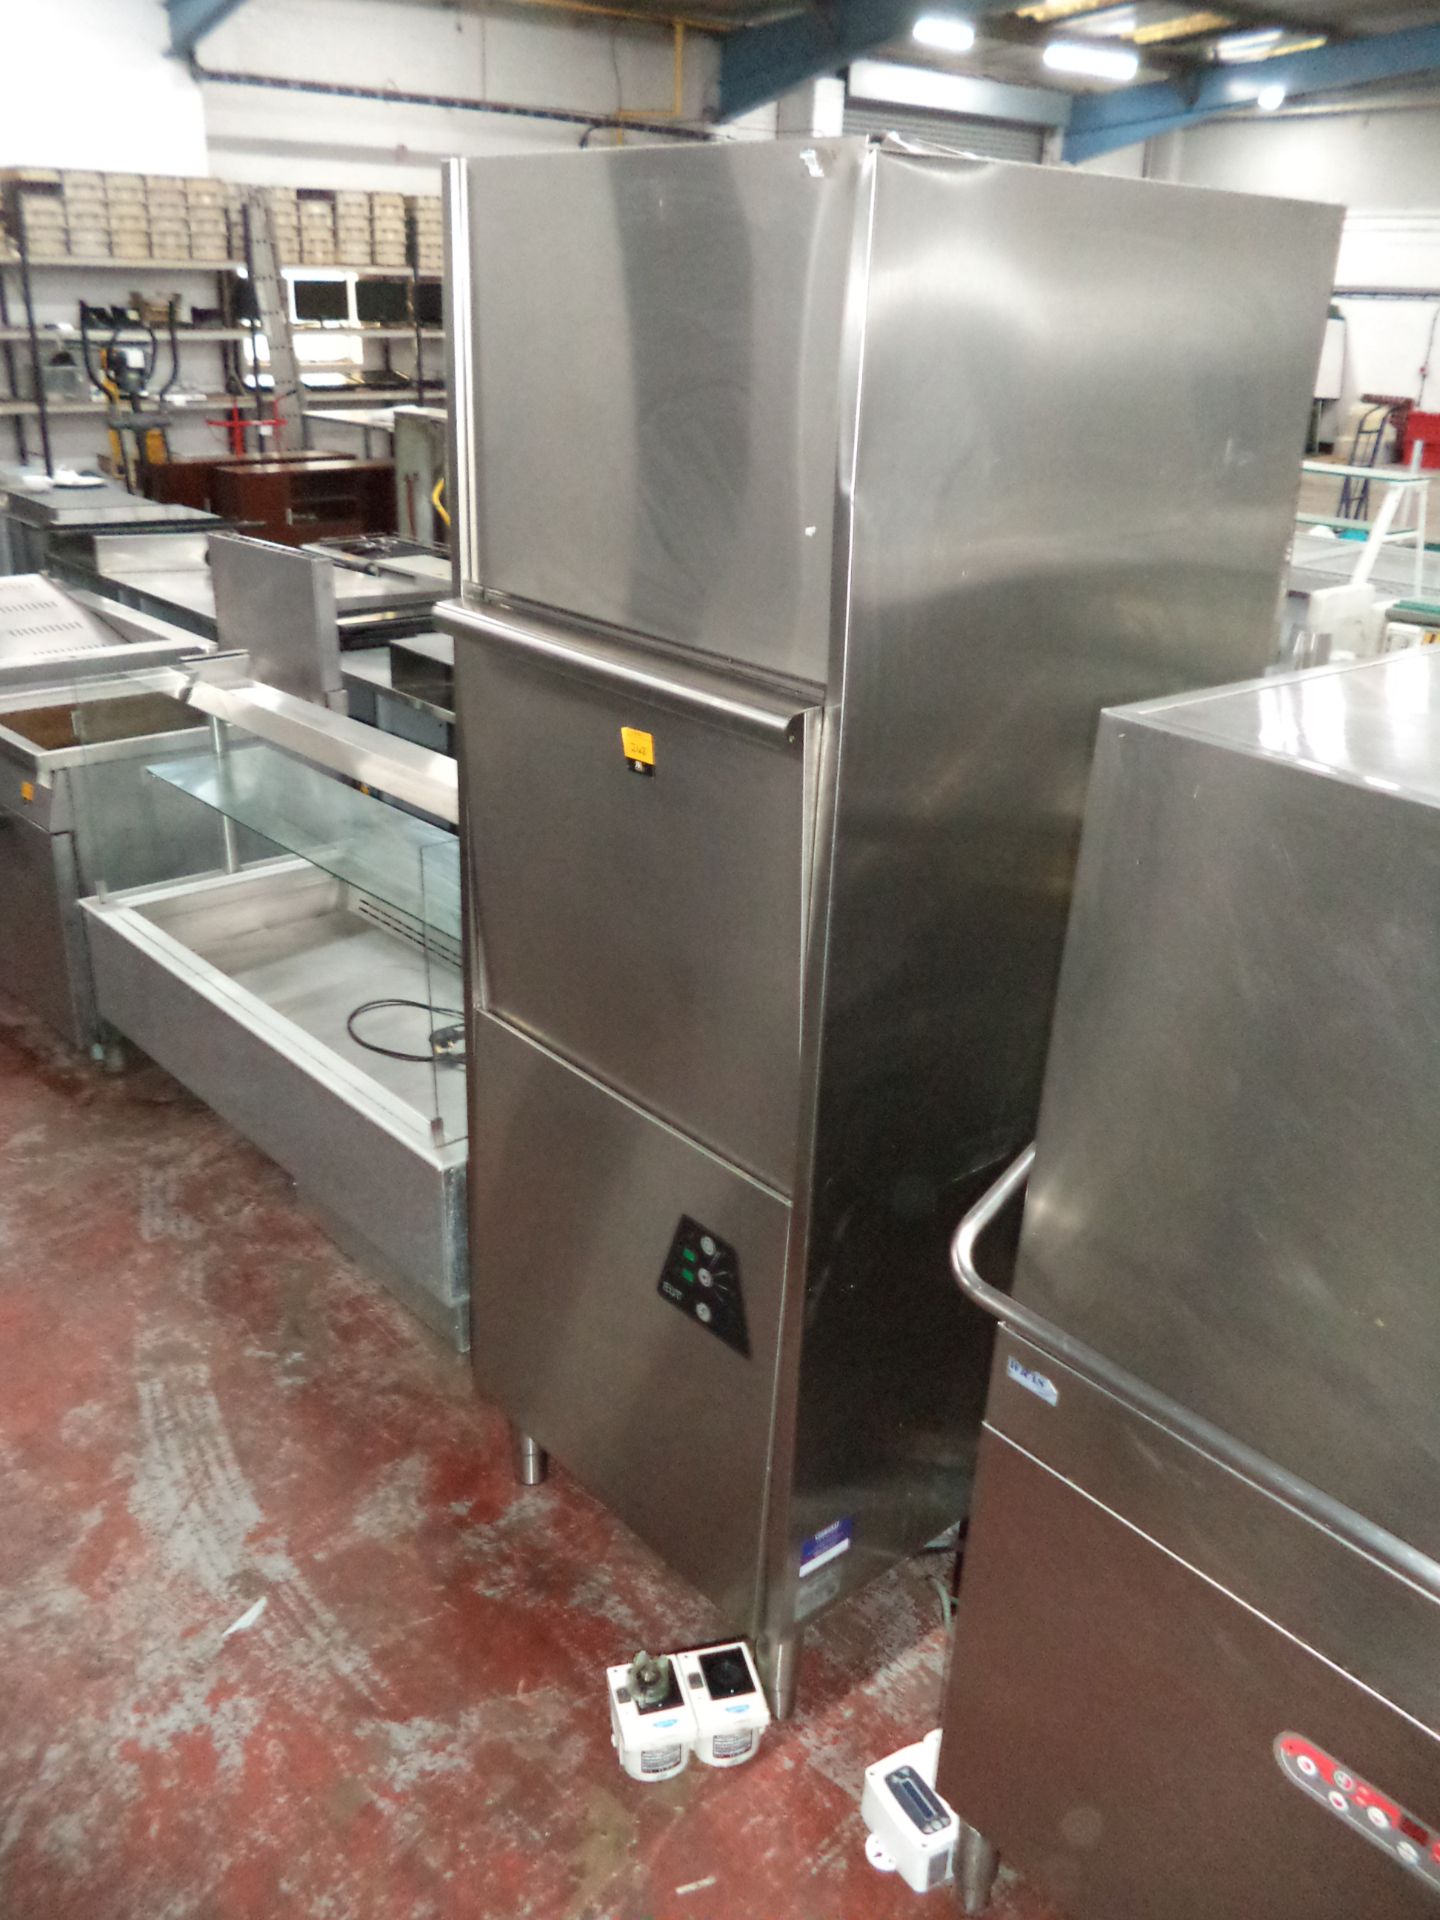 Hobart EUT model KLP105HUK stainless steel commercial dishwasher including Diversey controls